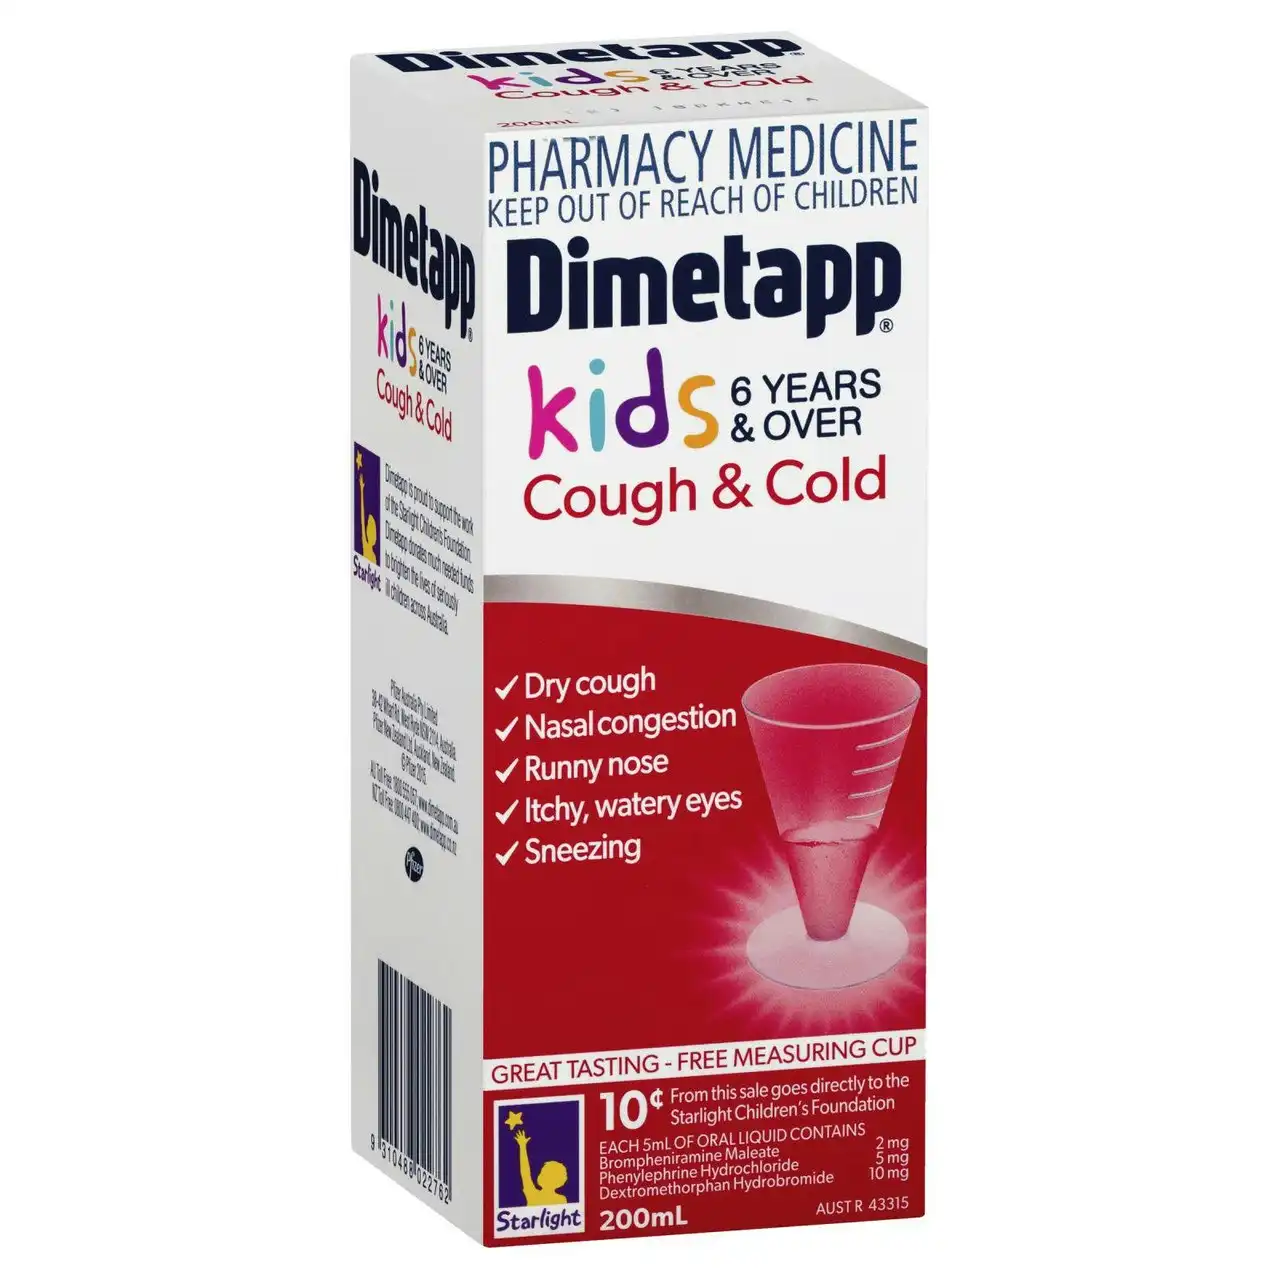 Dimetapp Cough & Cold Kids 6 Years + 200ml